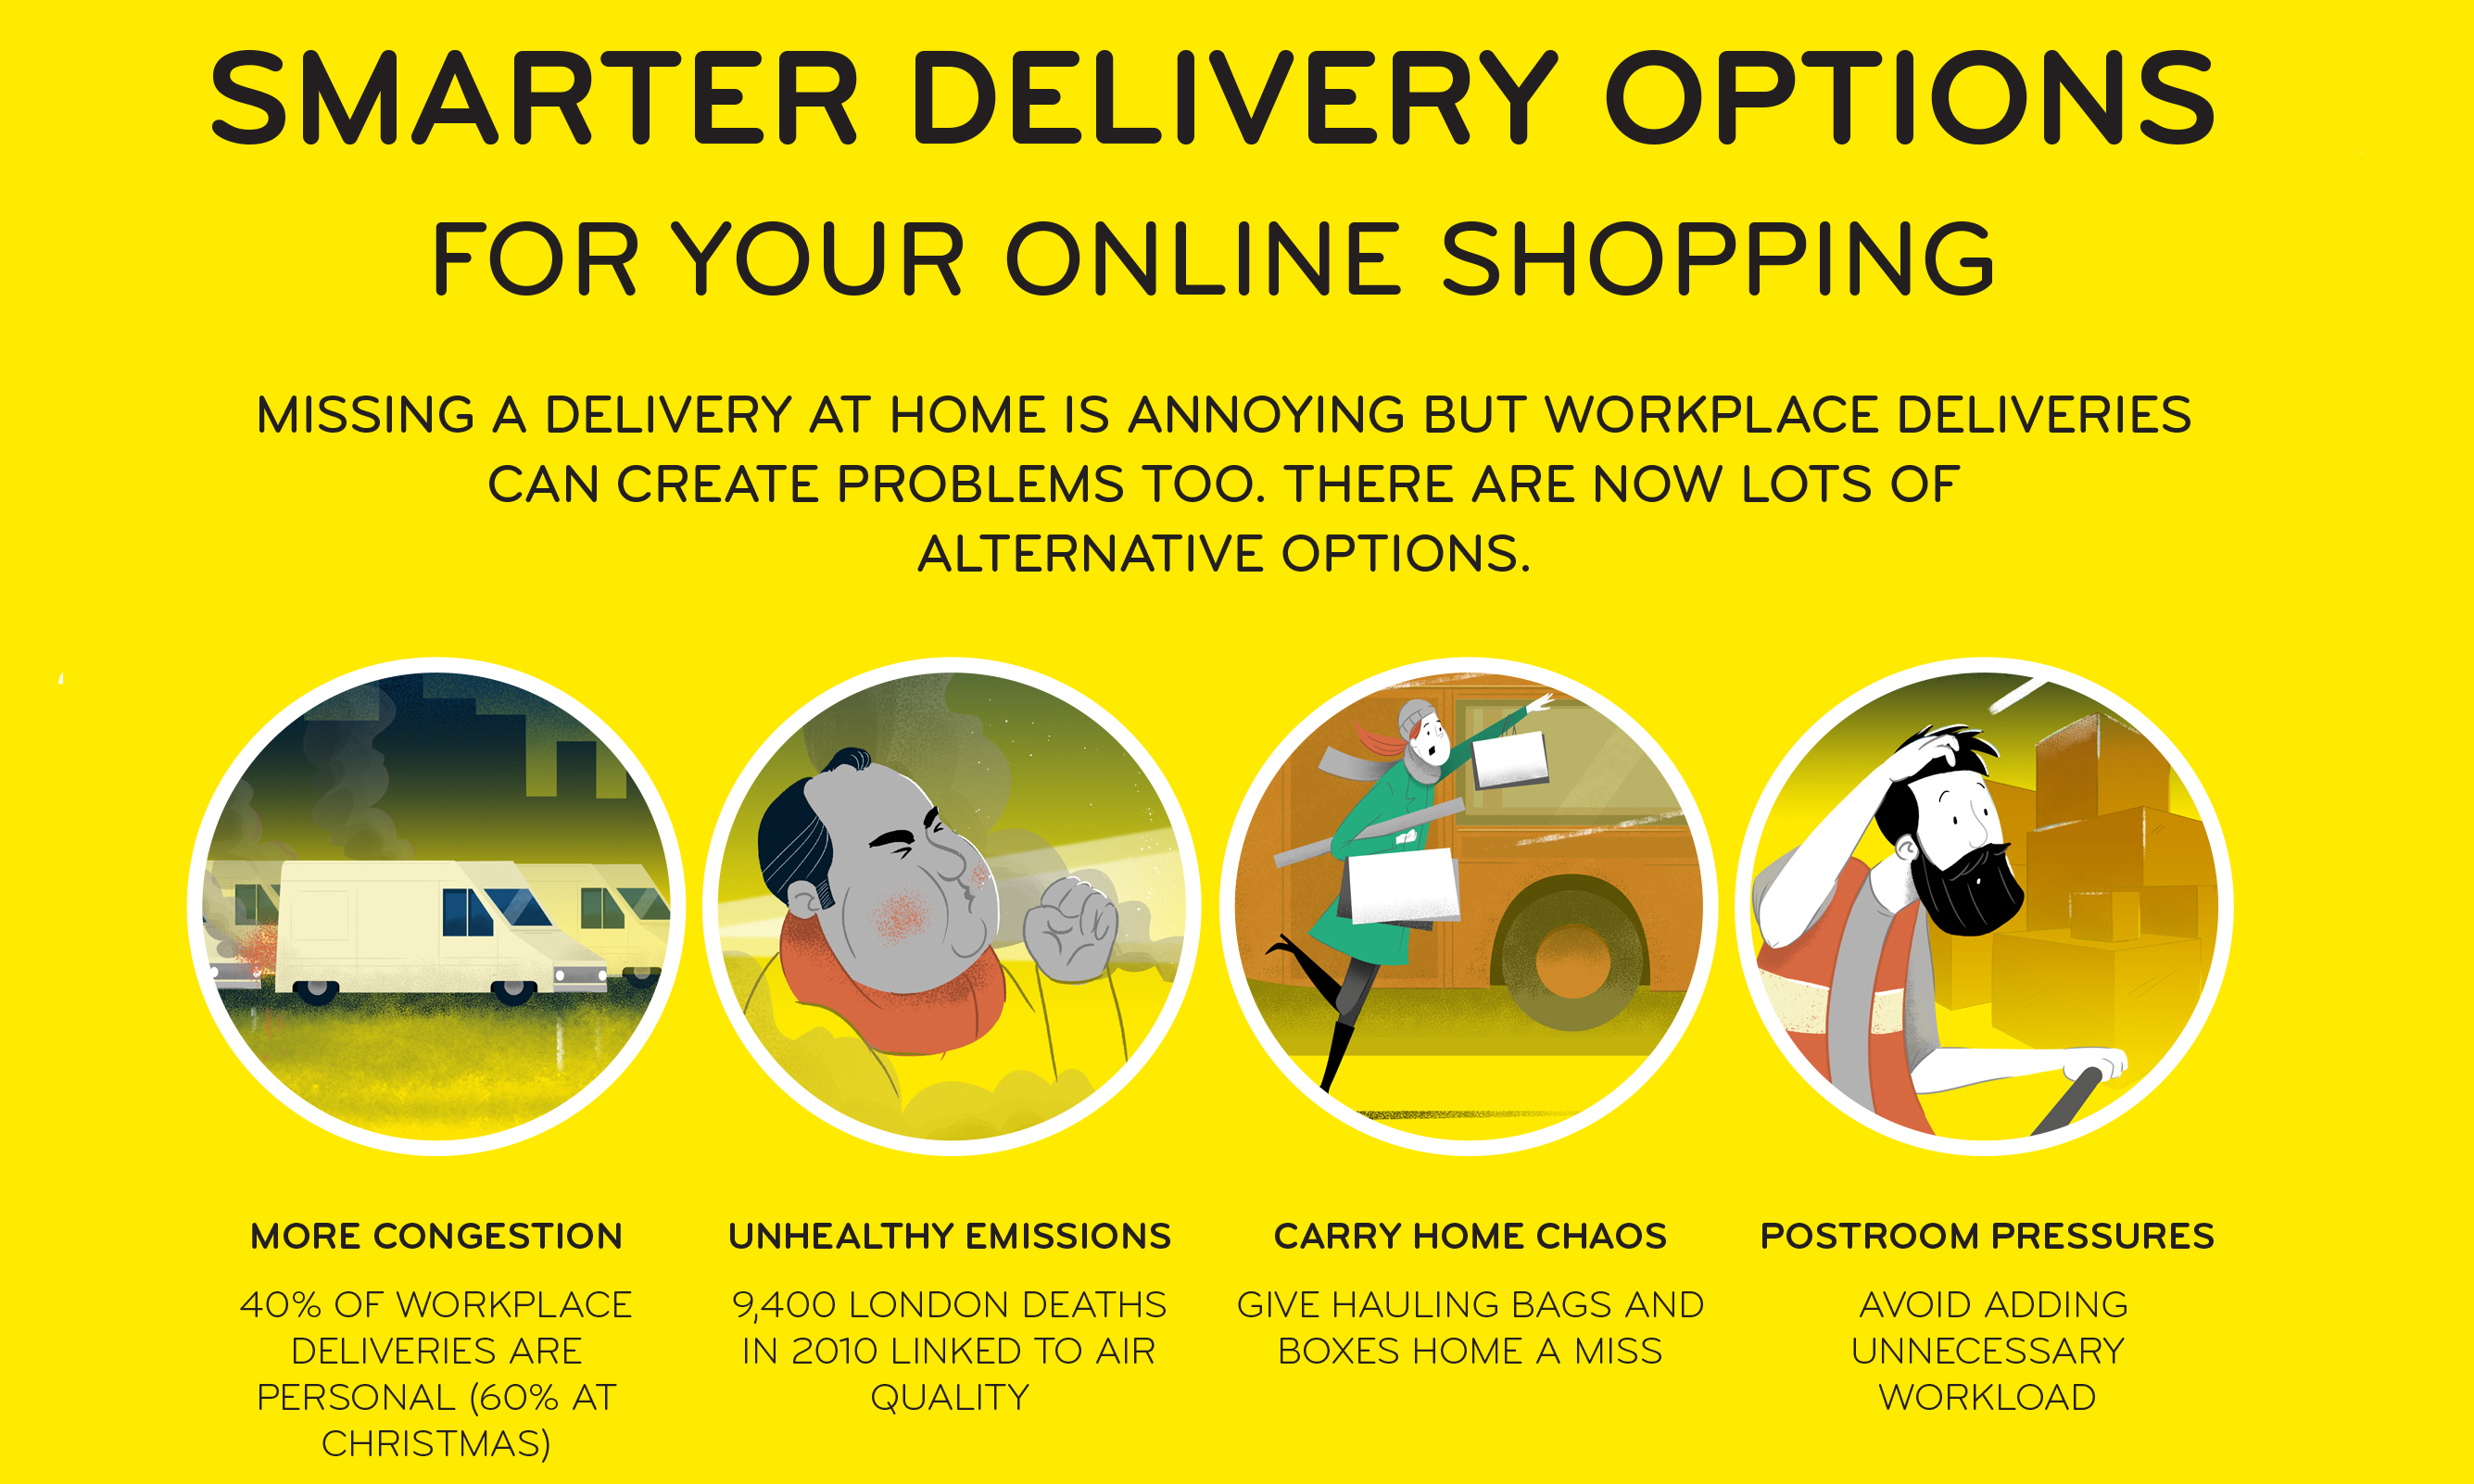 Delivery Options Infographic.indd | Baker Street Quarter Partnership